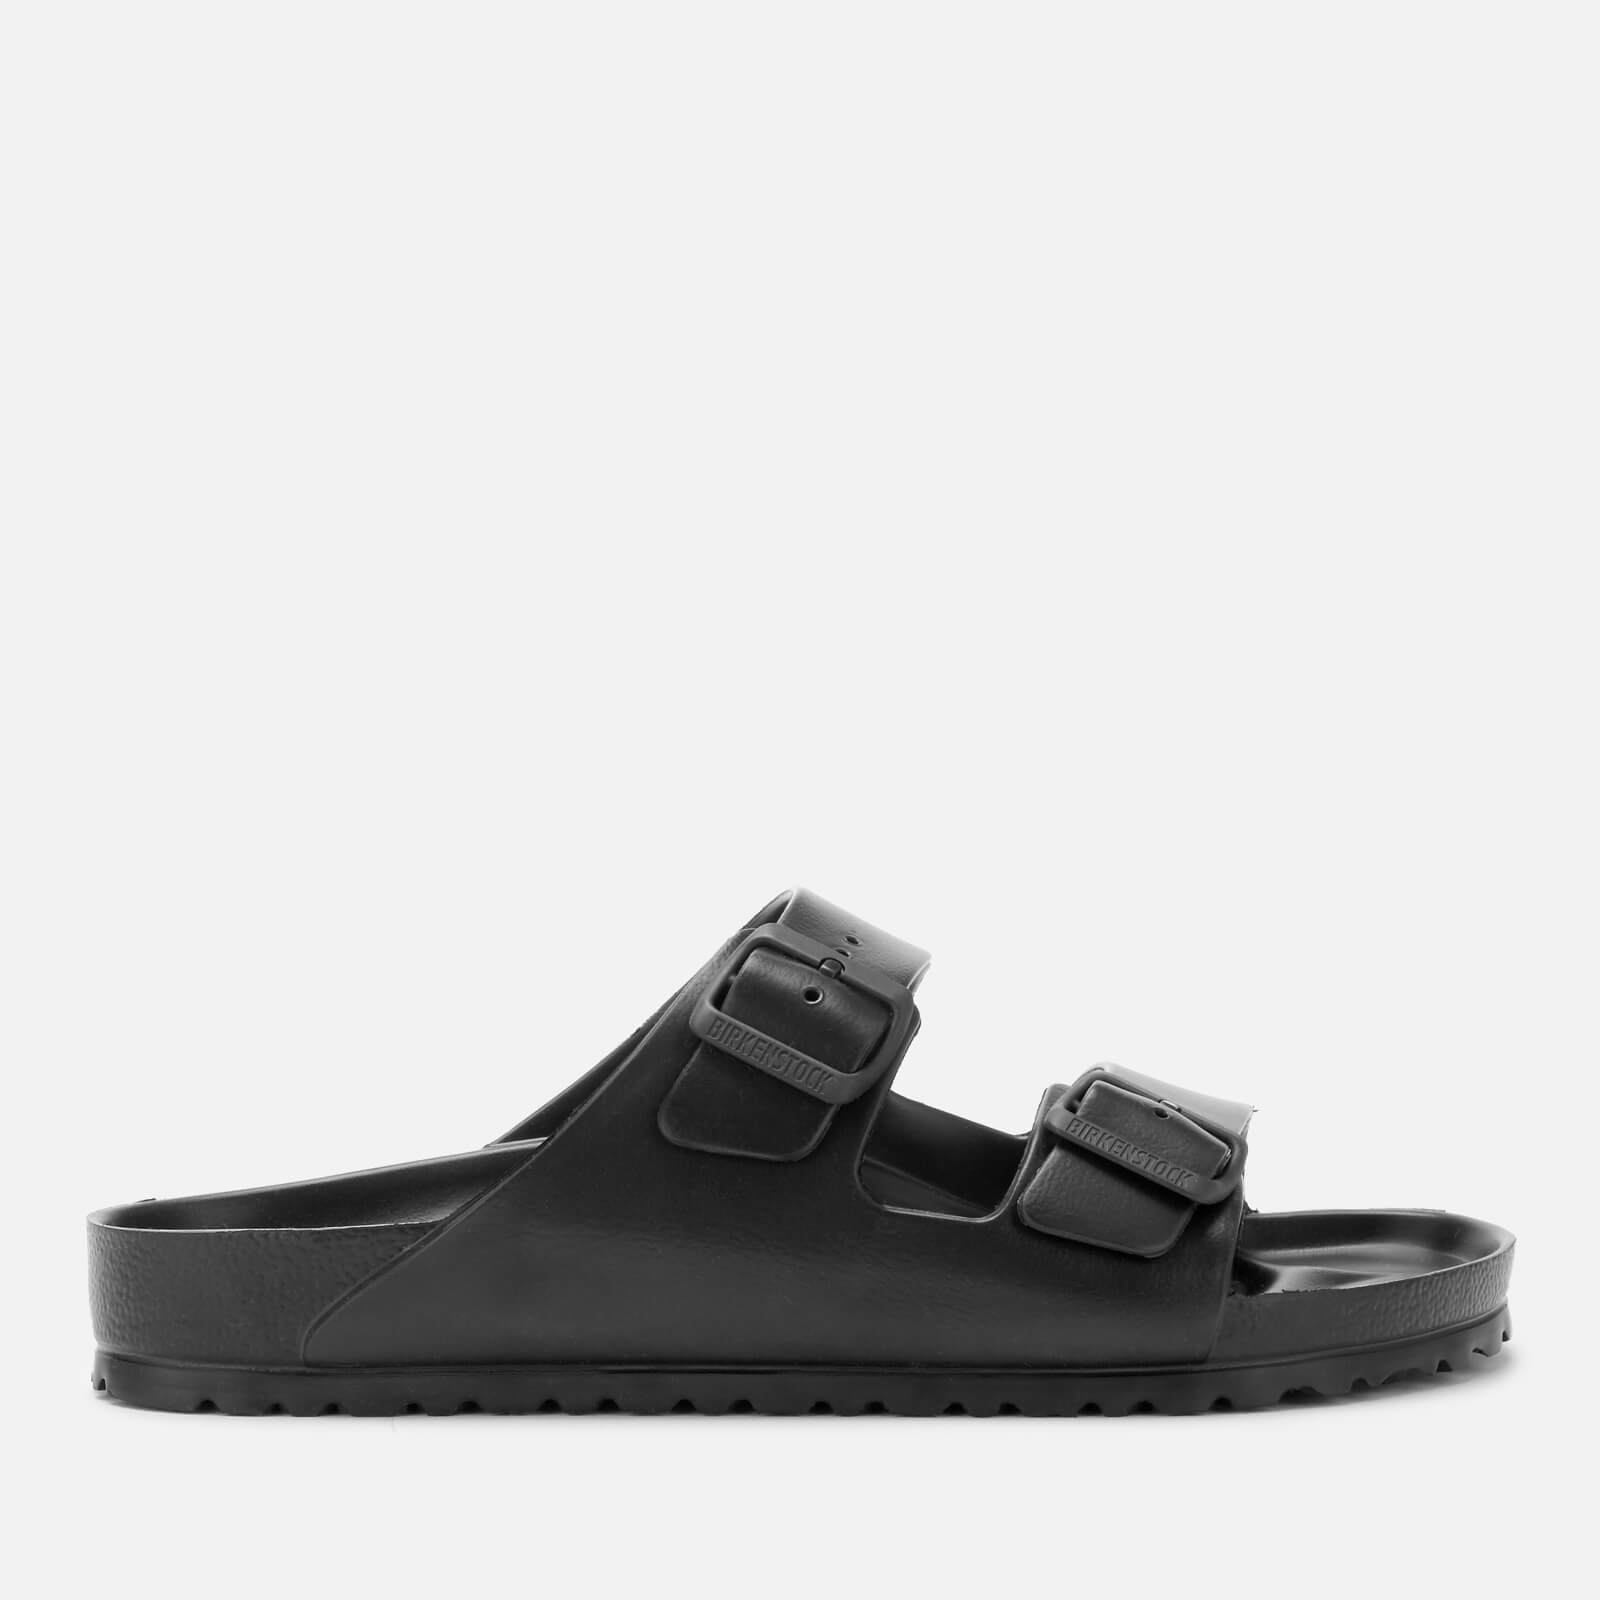 Birkenstock Men’s Arizona Eva Double Strap Sandals - Black